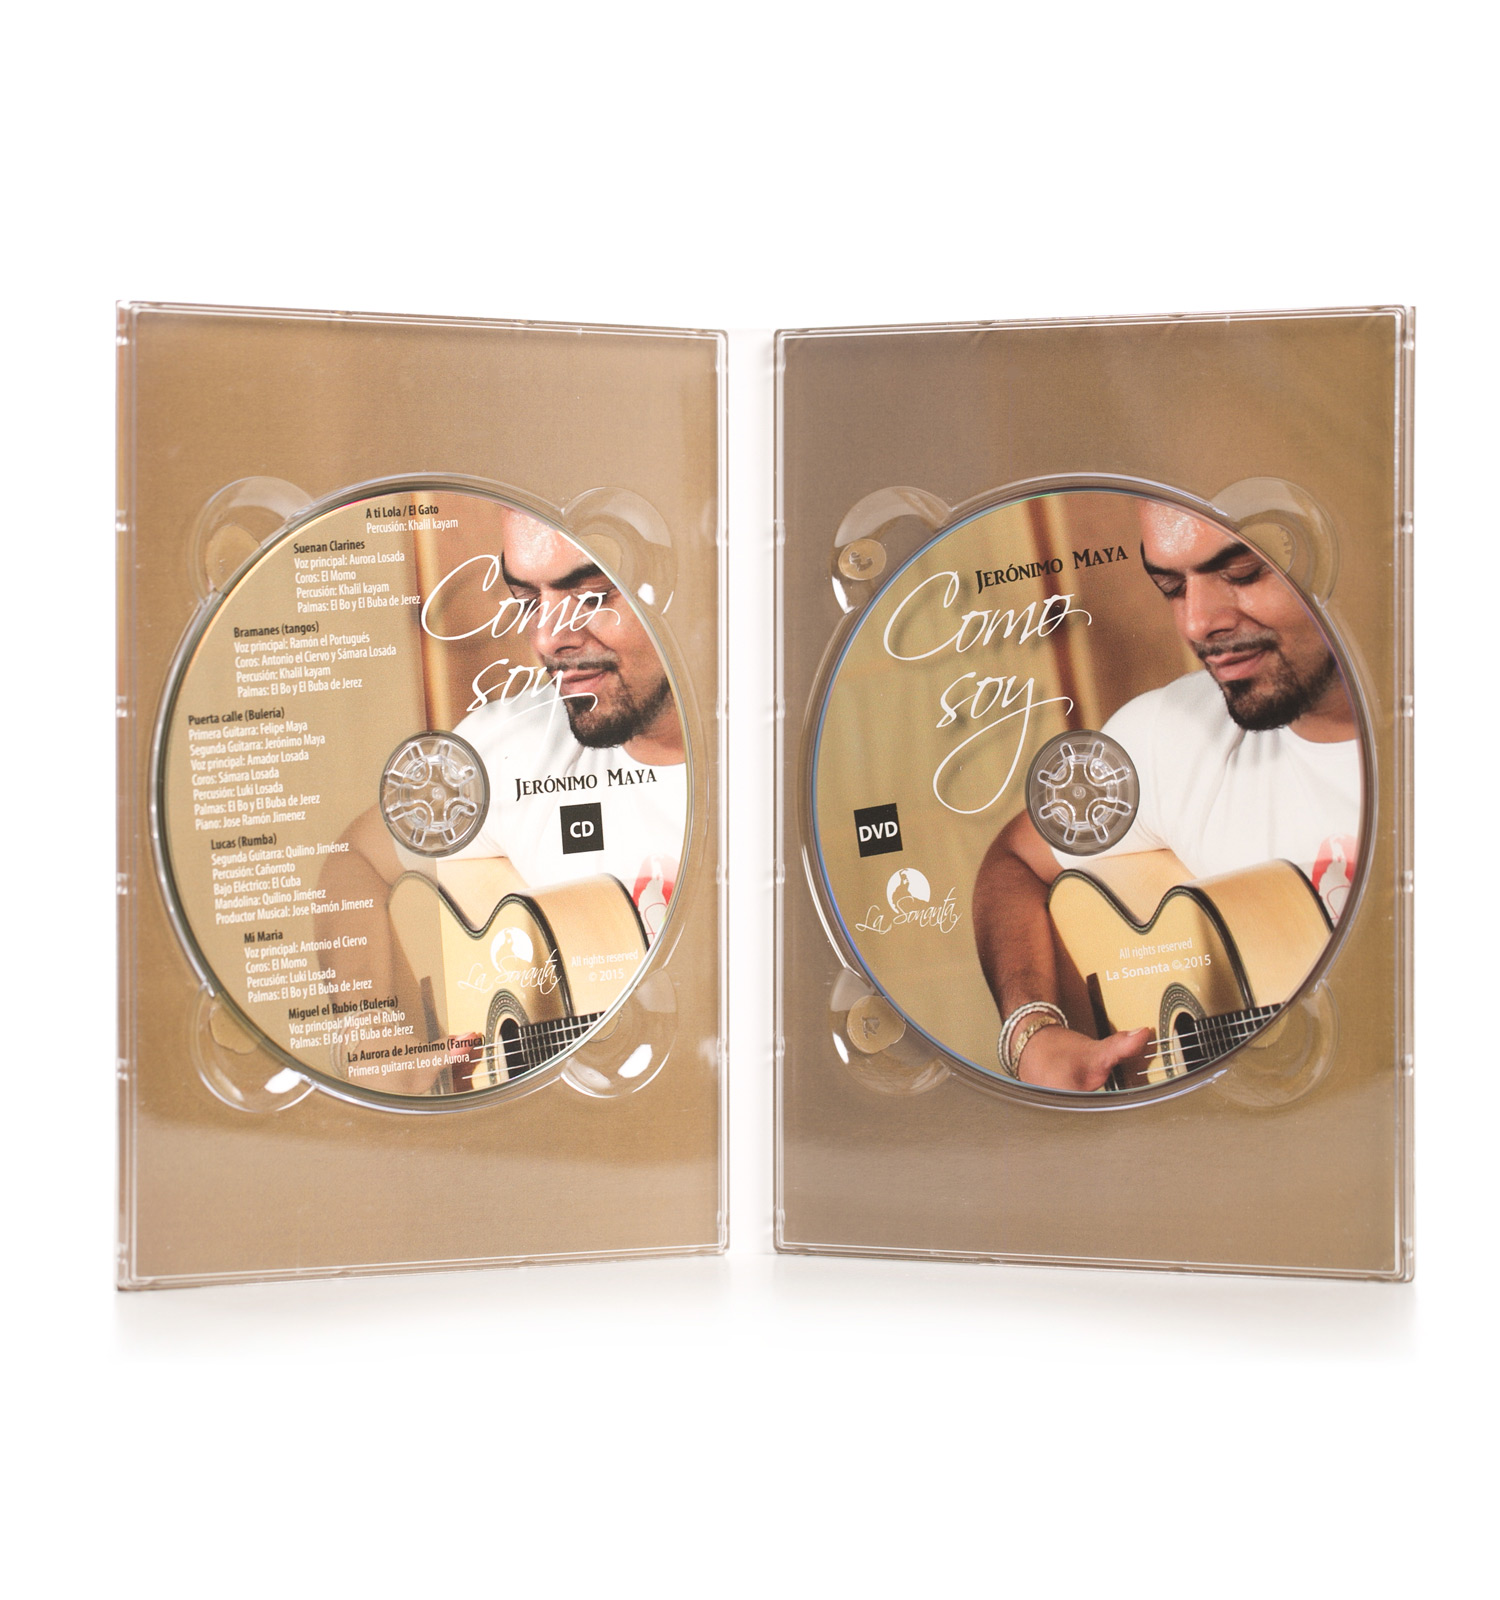 Jeronimo Maya 'Como Soy' (CD+ DVD)